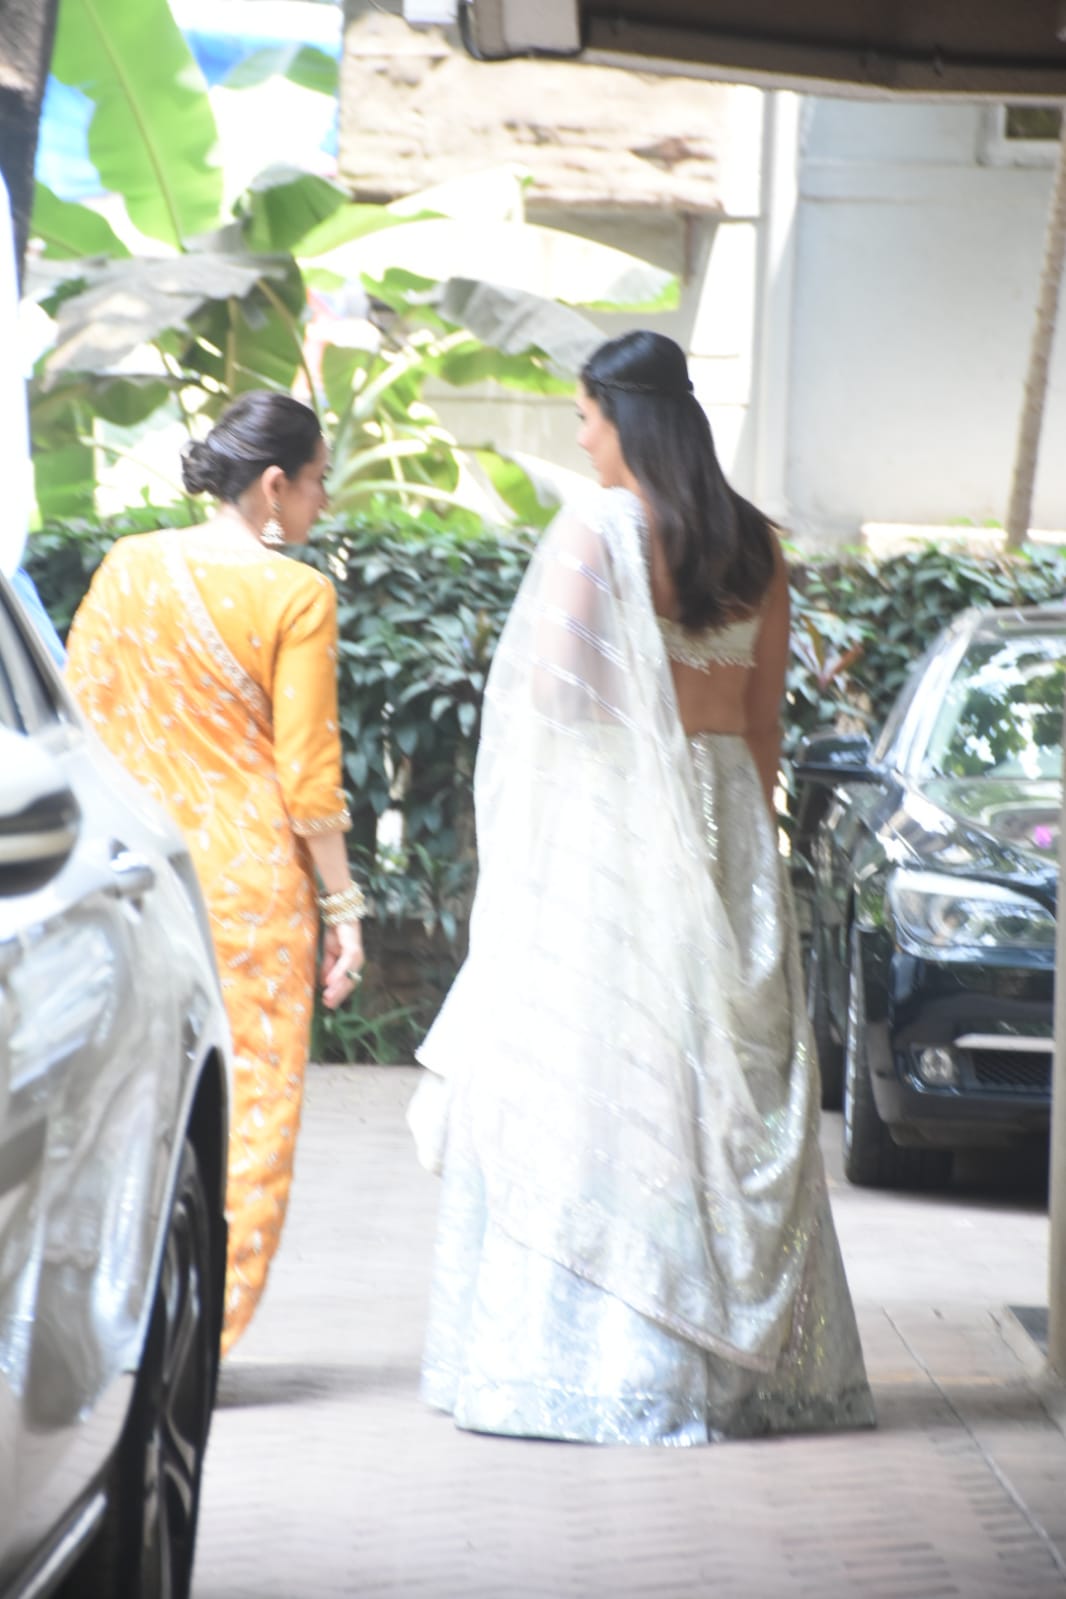 Ranbir Kapoor-Alia Bhatt Wedding: Kareena Kapoor Khan & Sister Karisma Look Stunning In Traditional Outfits As They Arrive At RK's Vastu House For Mehendi